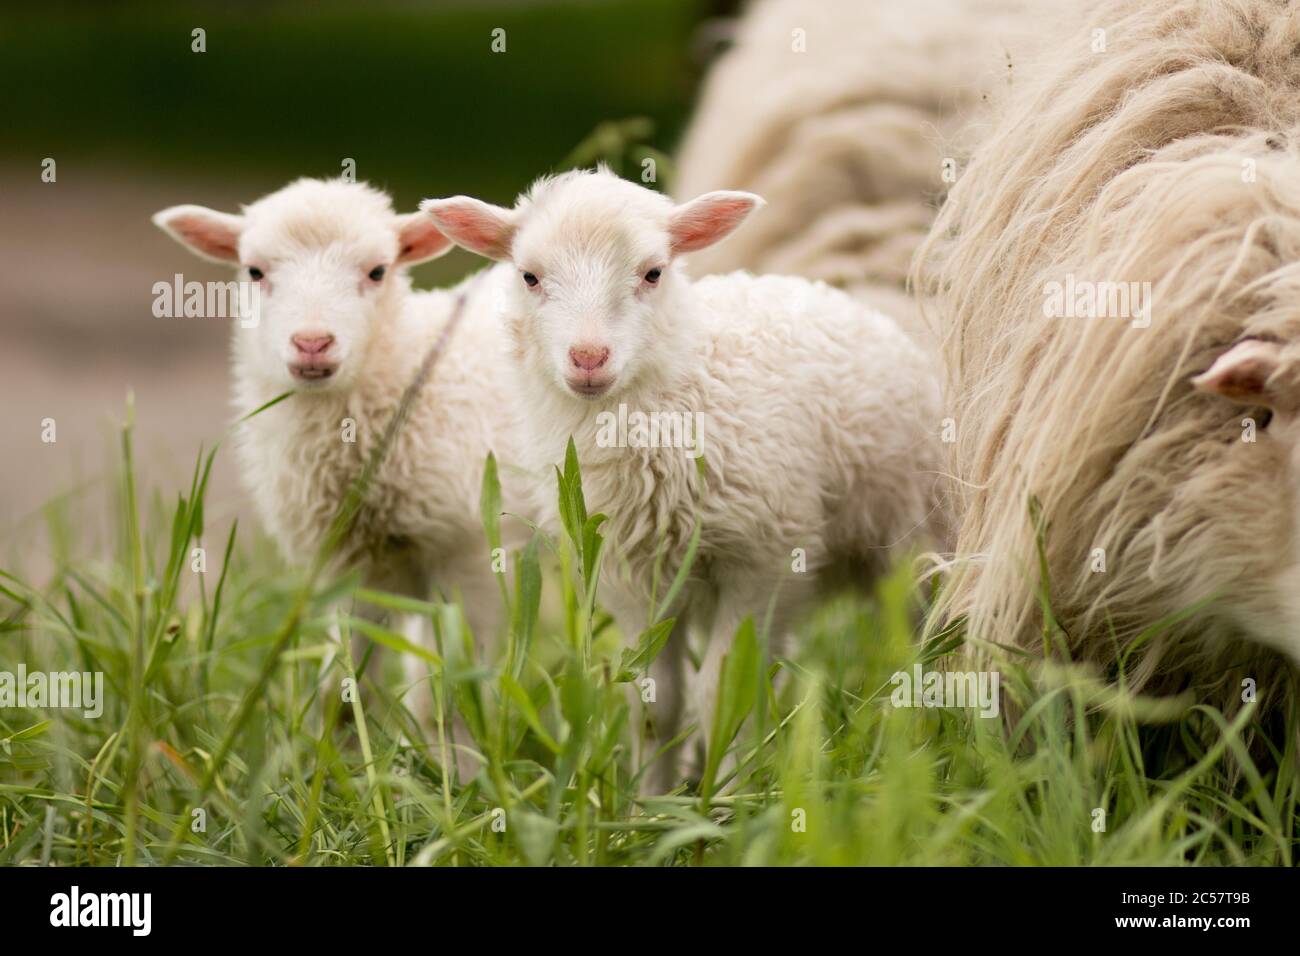 sheep twins mammal animal young farm lamp rural Stock Photo